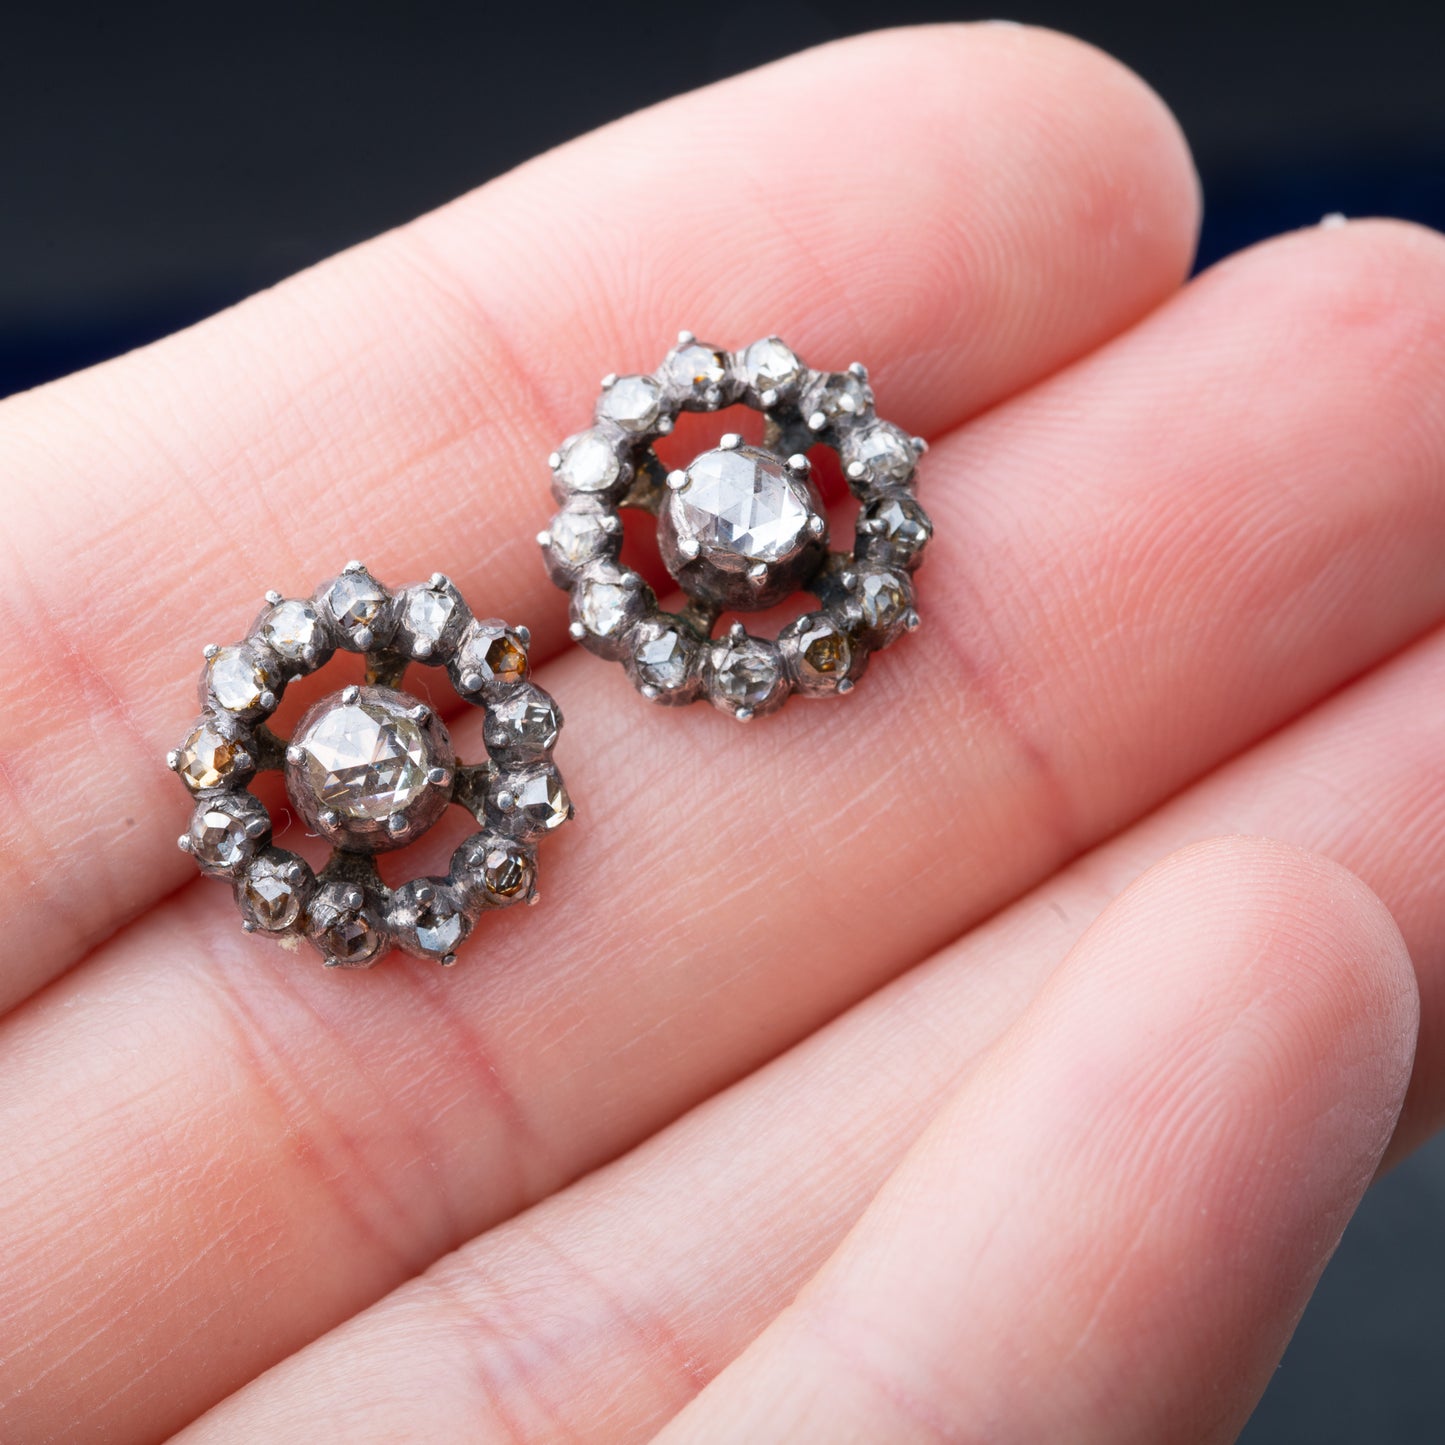 Antique Rosecut Diamond Earrings